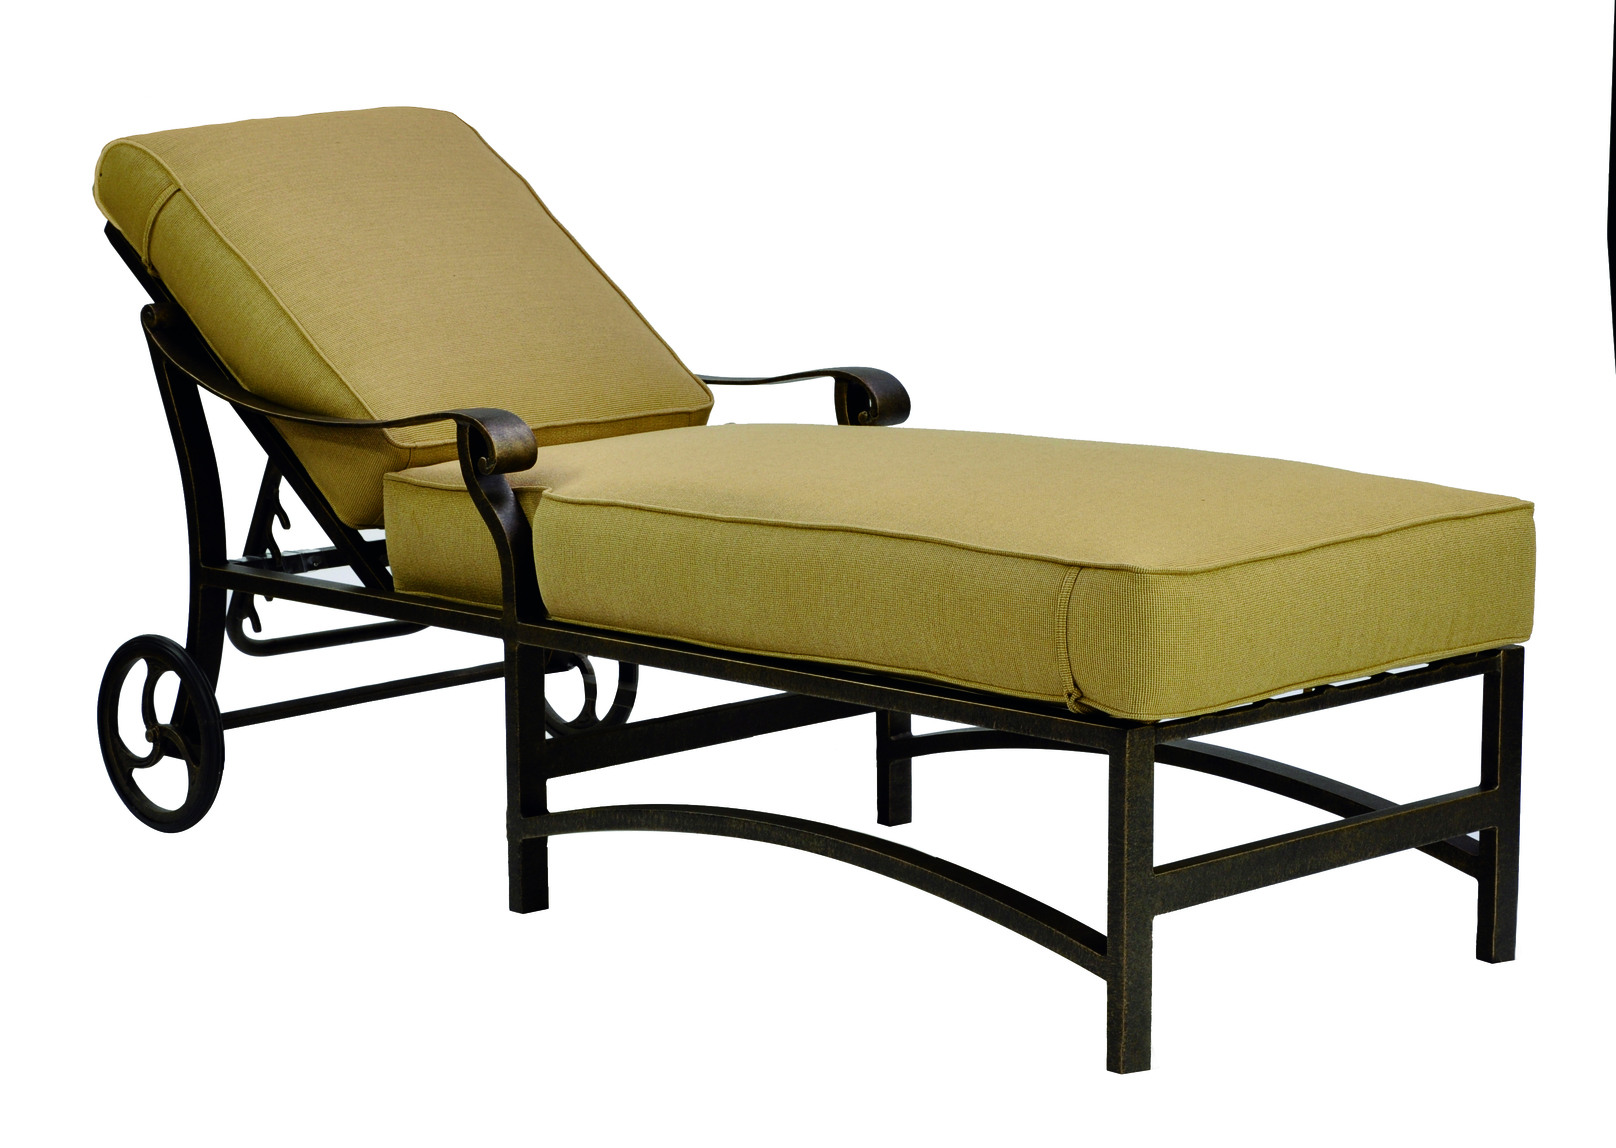 Madrid Cushion Adjustable Chaise Lounge w/ Wheels - Hauser's Patio